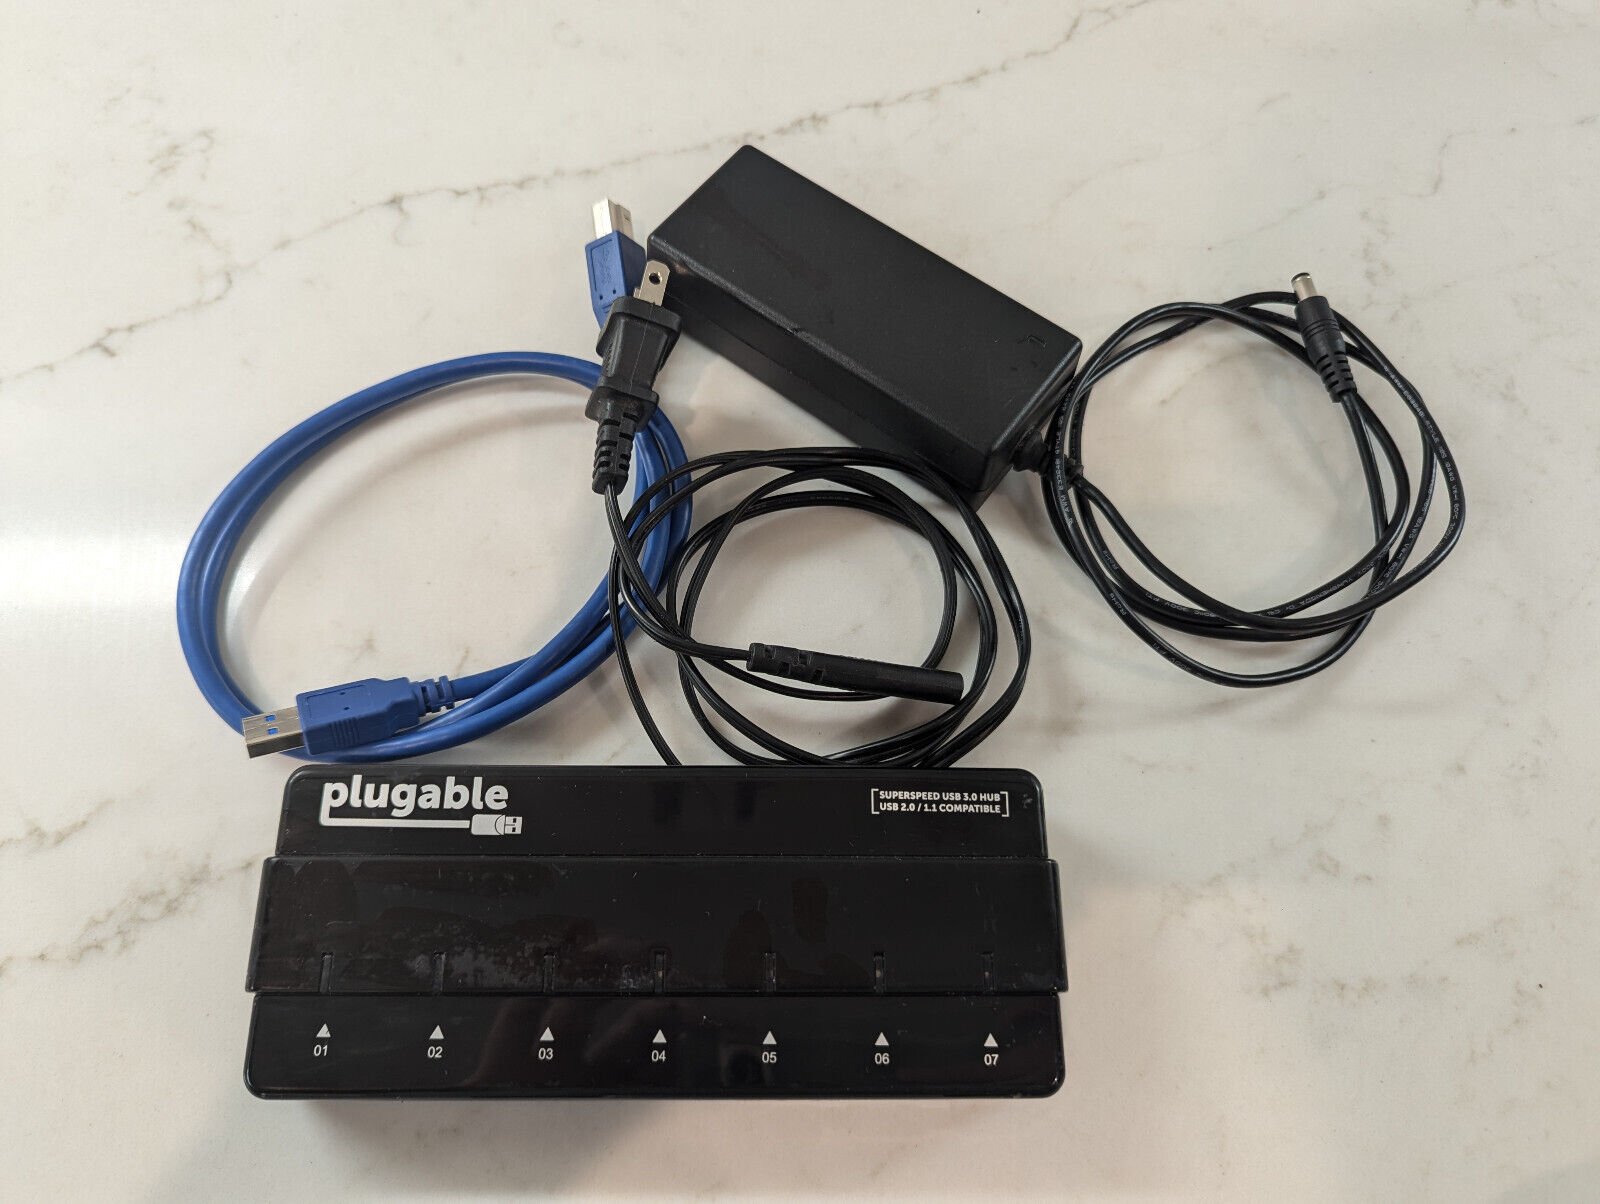 Plugable - Powered USB 3.0 7-Port Hub 